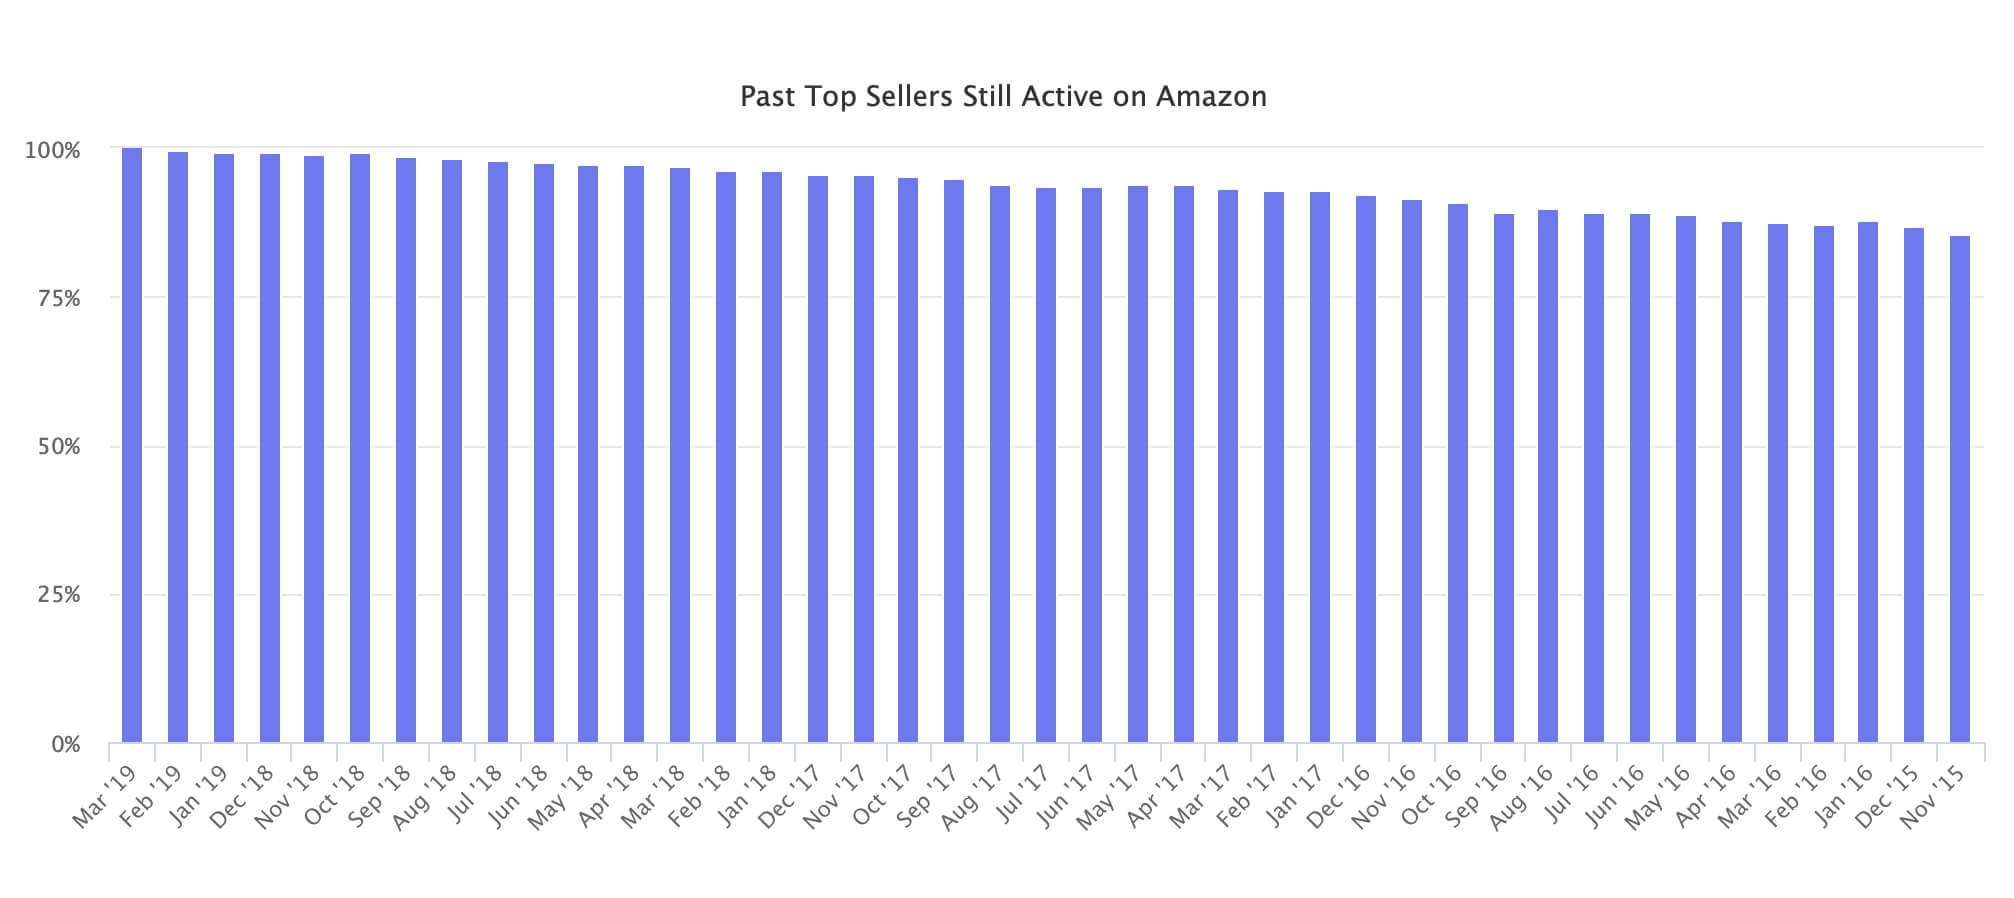 Past Top Sellers Still Active on Amazon